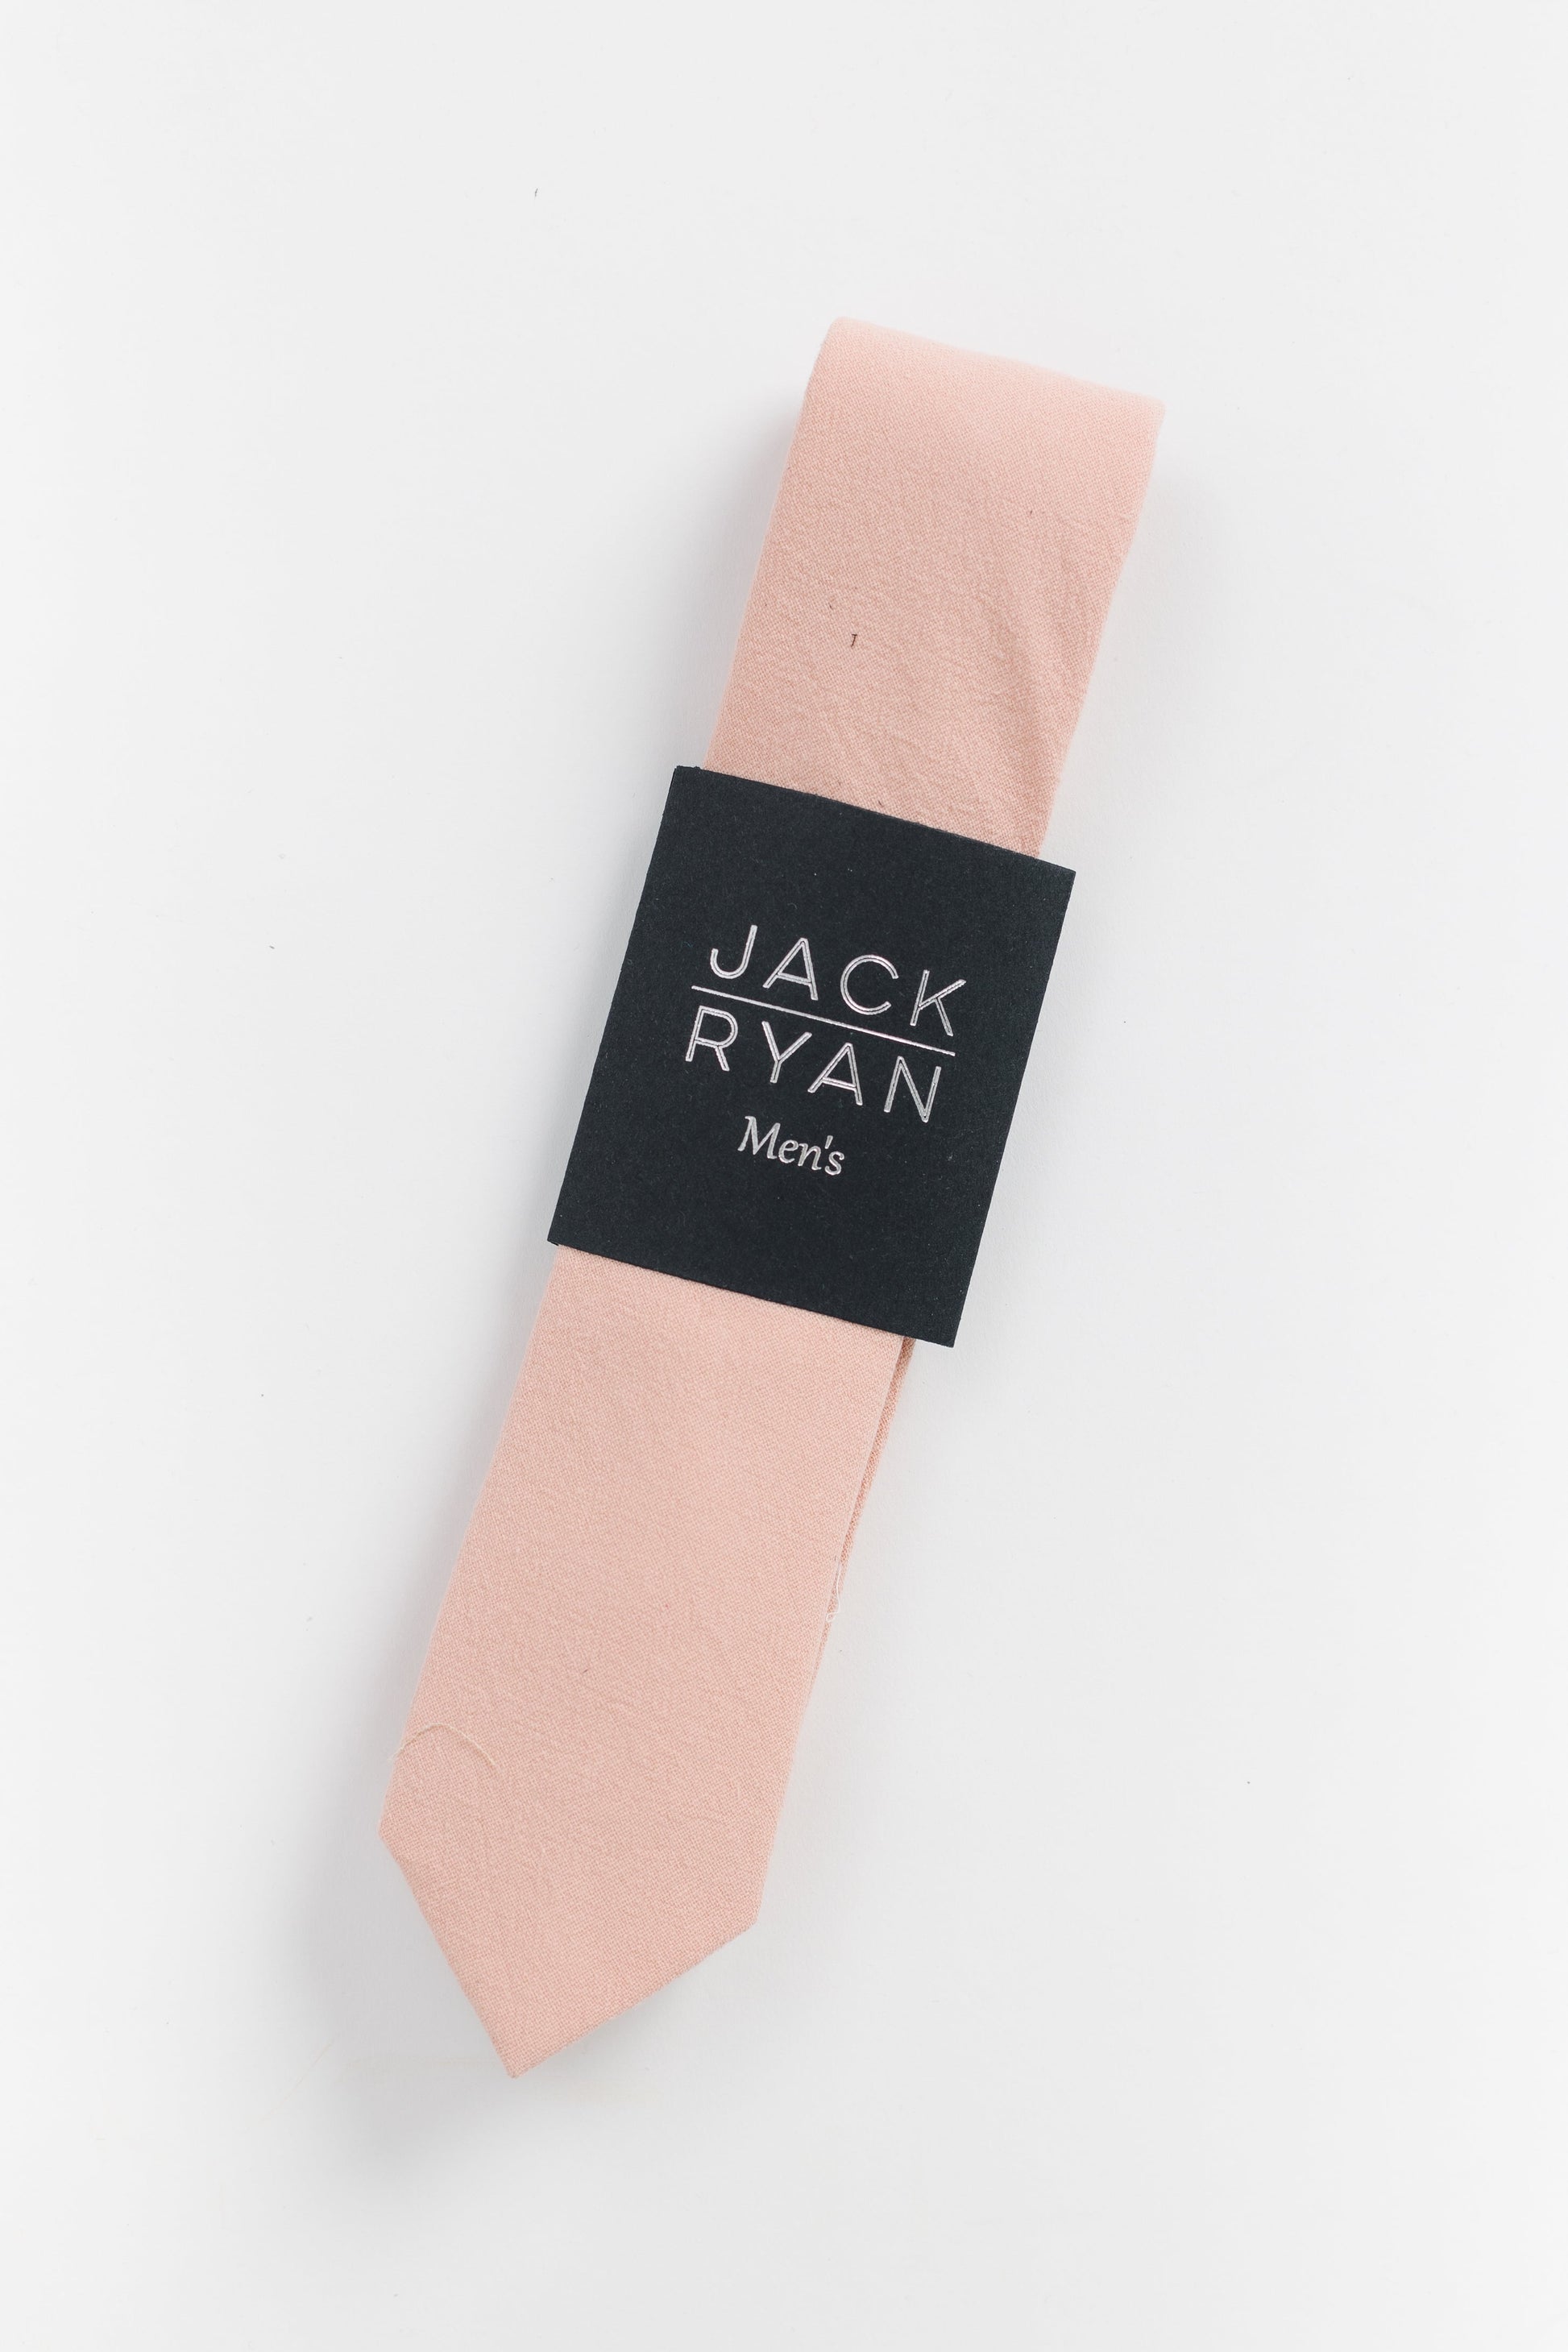 Jack Ryan Solid Collection MEN'S TIE JACK RYAN Peach 58"L x 2.25"W 